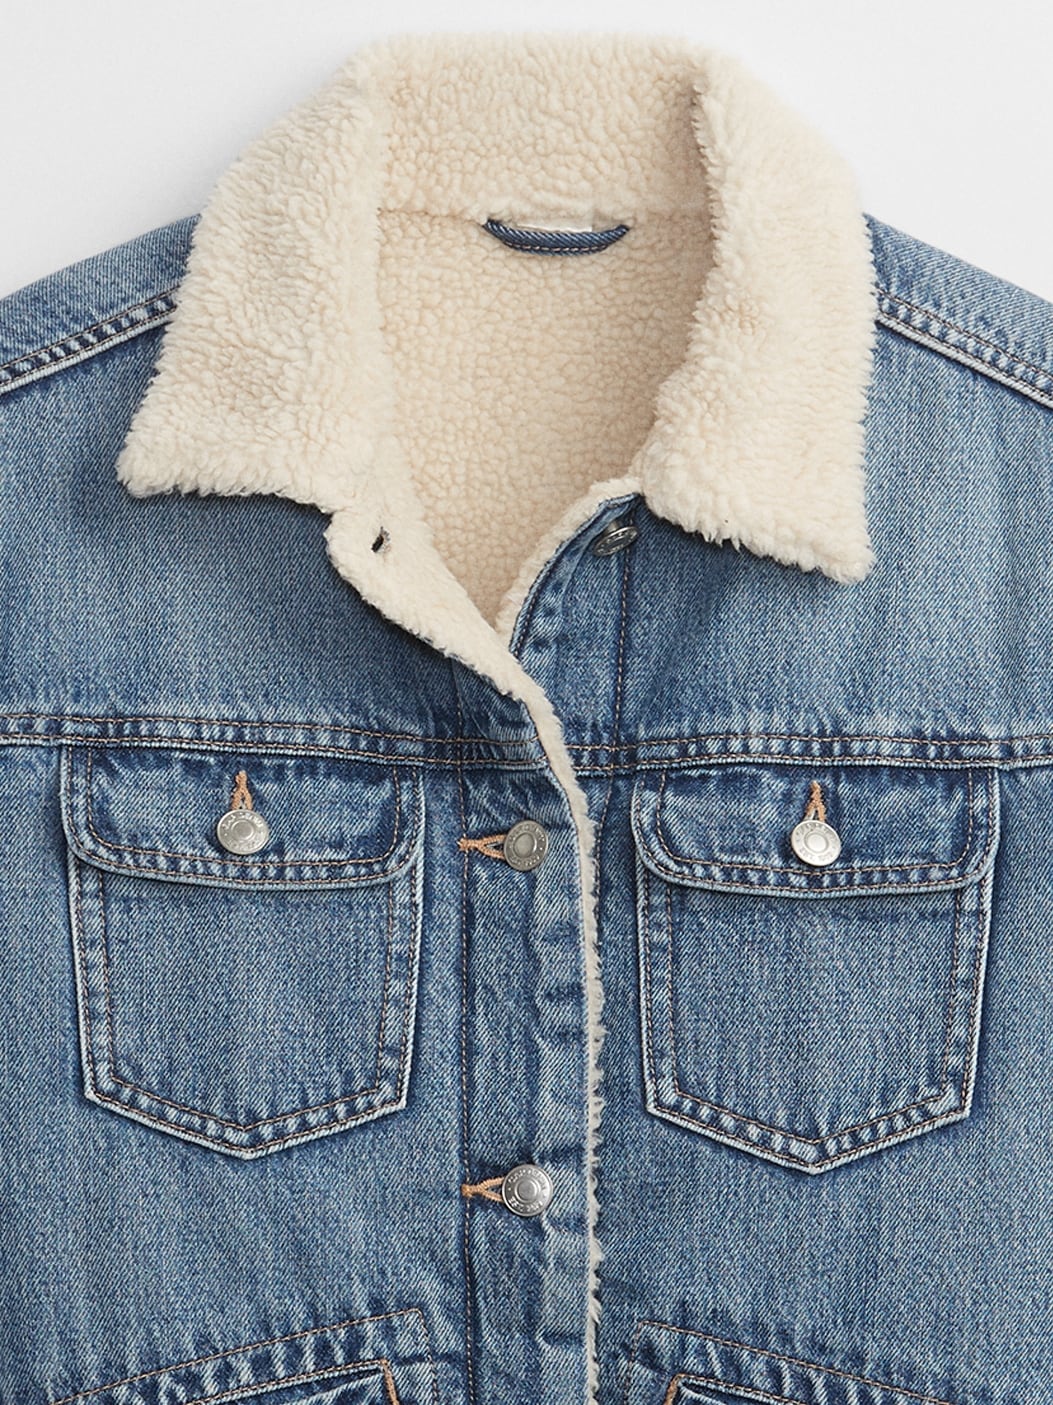 Vintage Sherpa Icon Denim Jacket with Washwell | Gap Factory